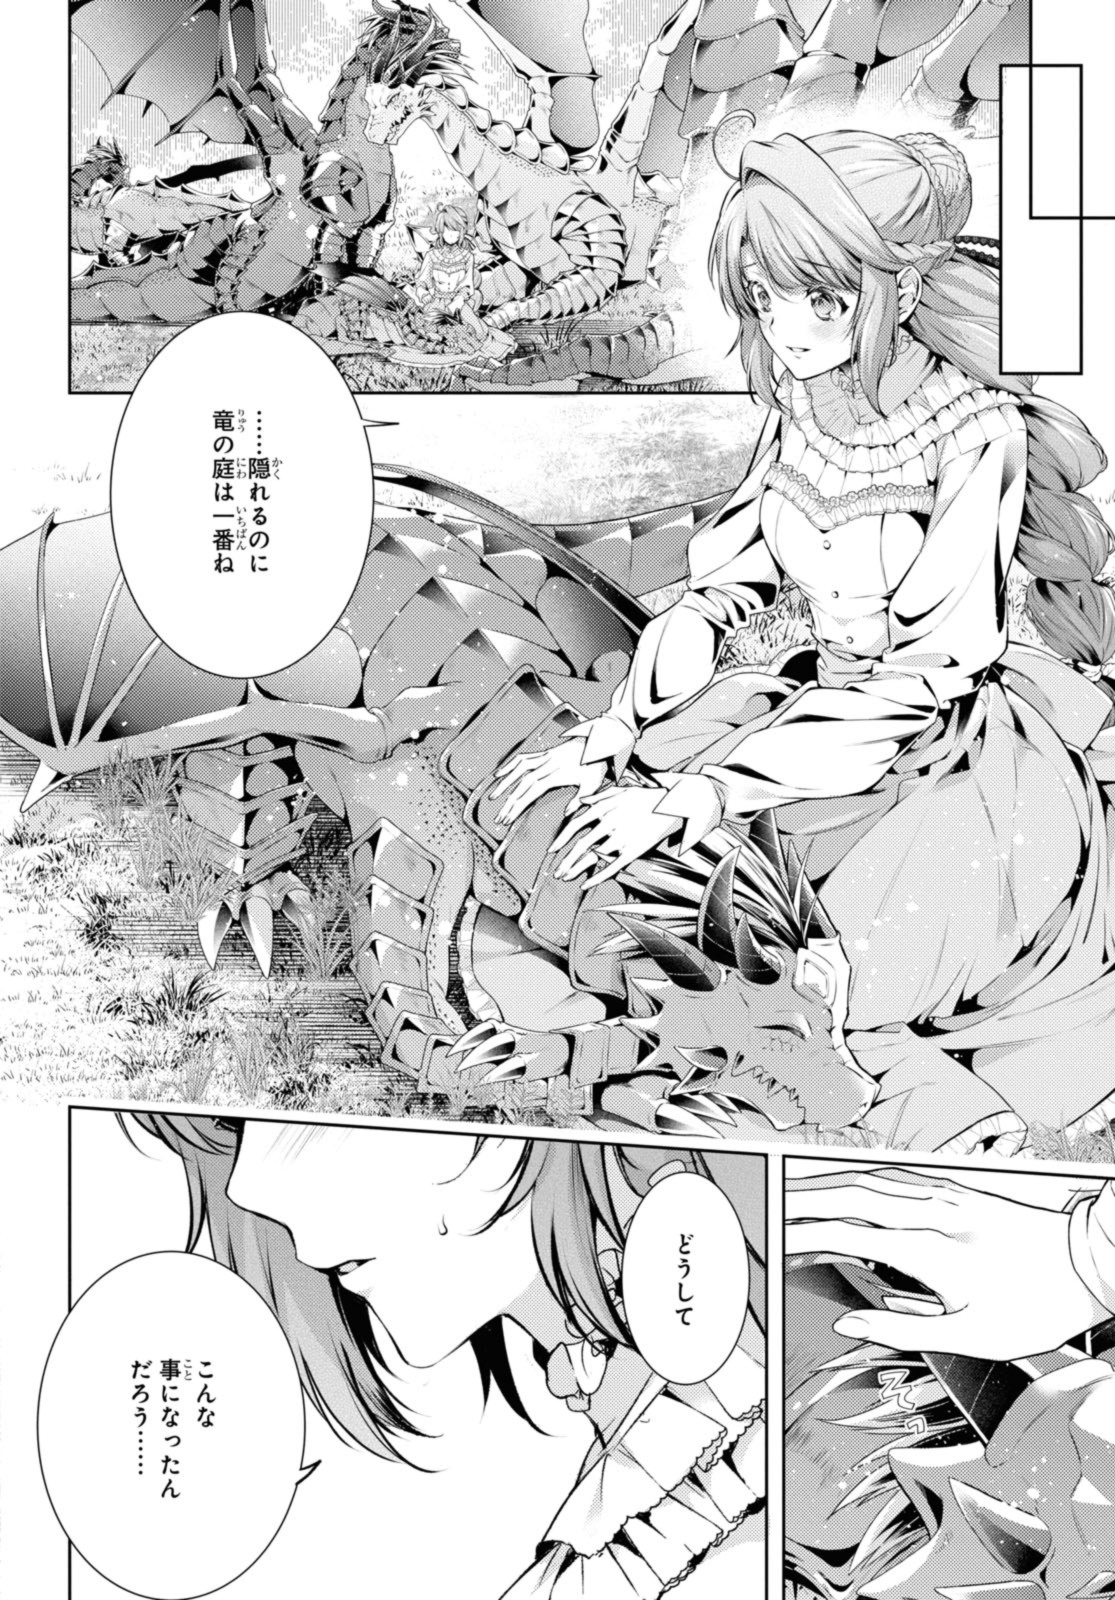 Ryukishi no Okiniiri - Chapter 45.2 - Page 4